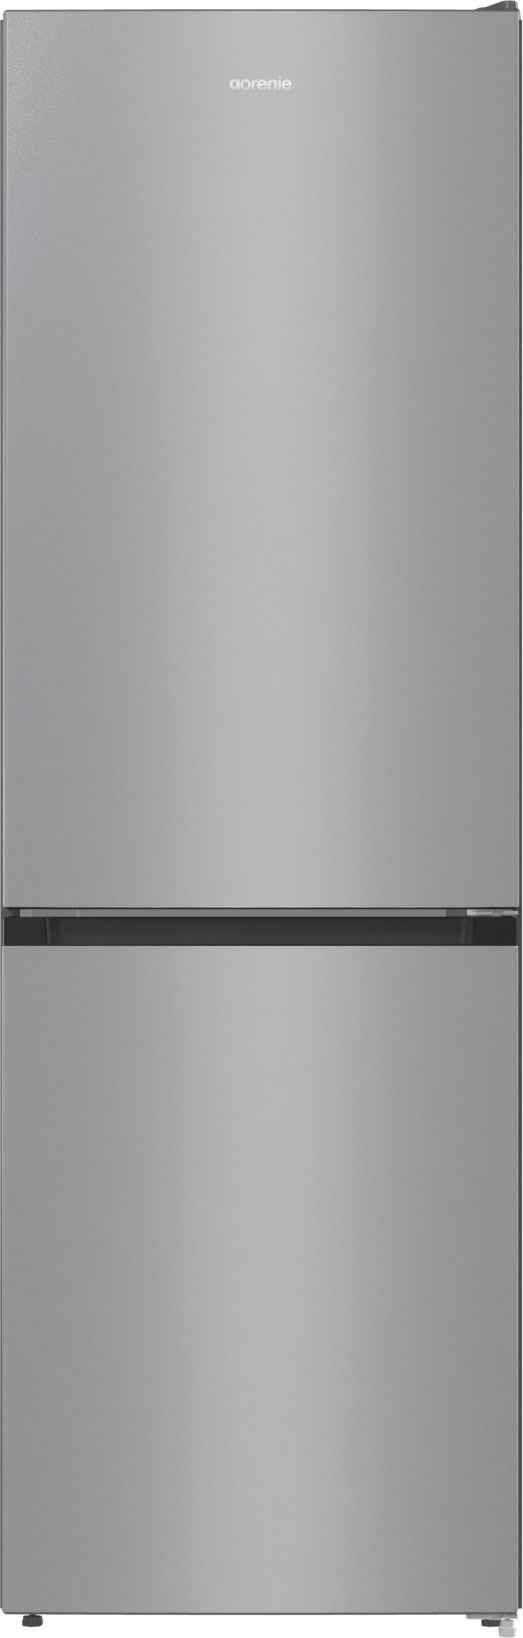 Combine frigorifice - Combina frigorifica  Gorenje NRK6191ES4,
Argint,4 rafturi,
38 dB,
Cu display